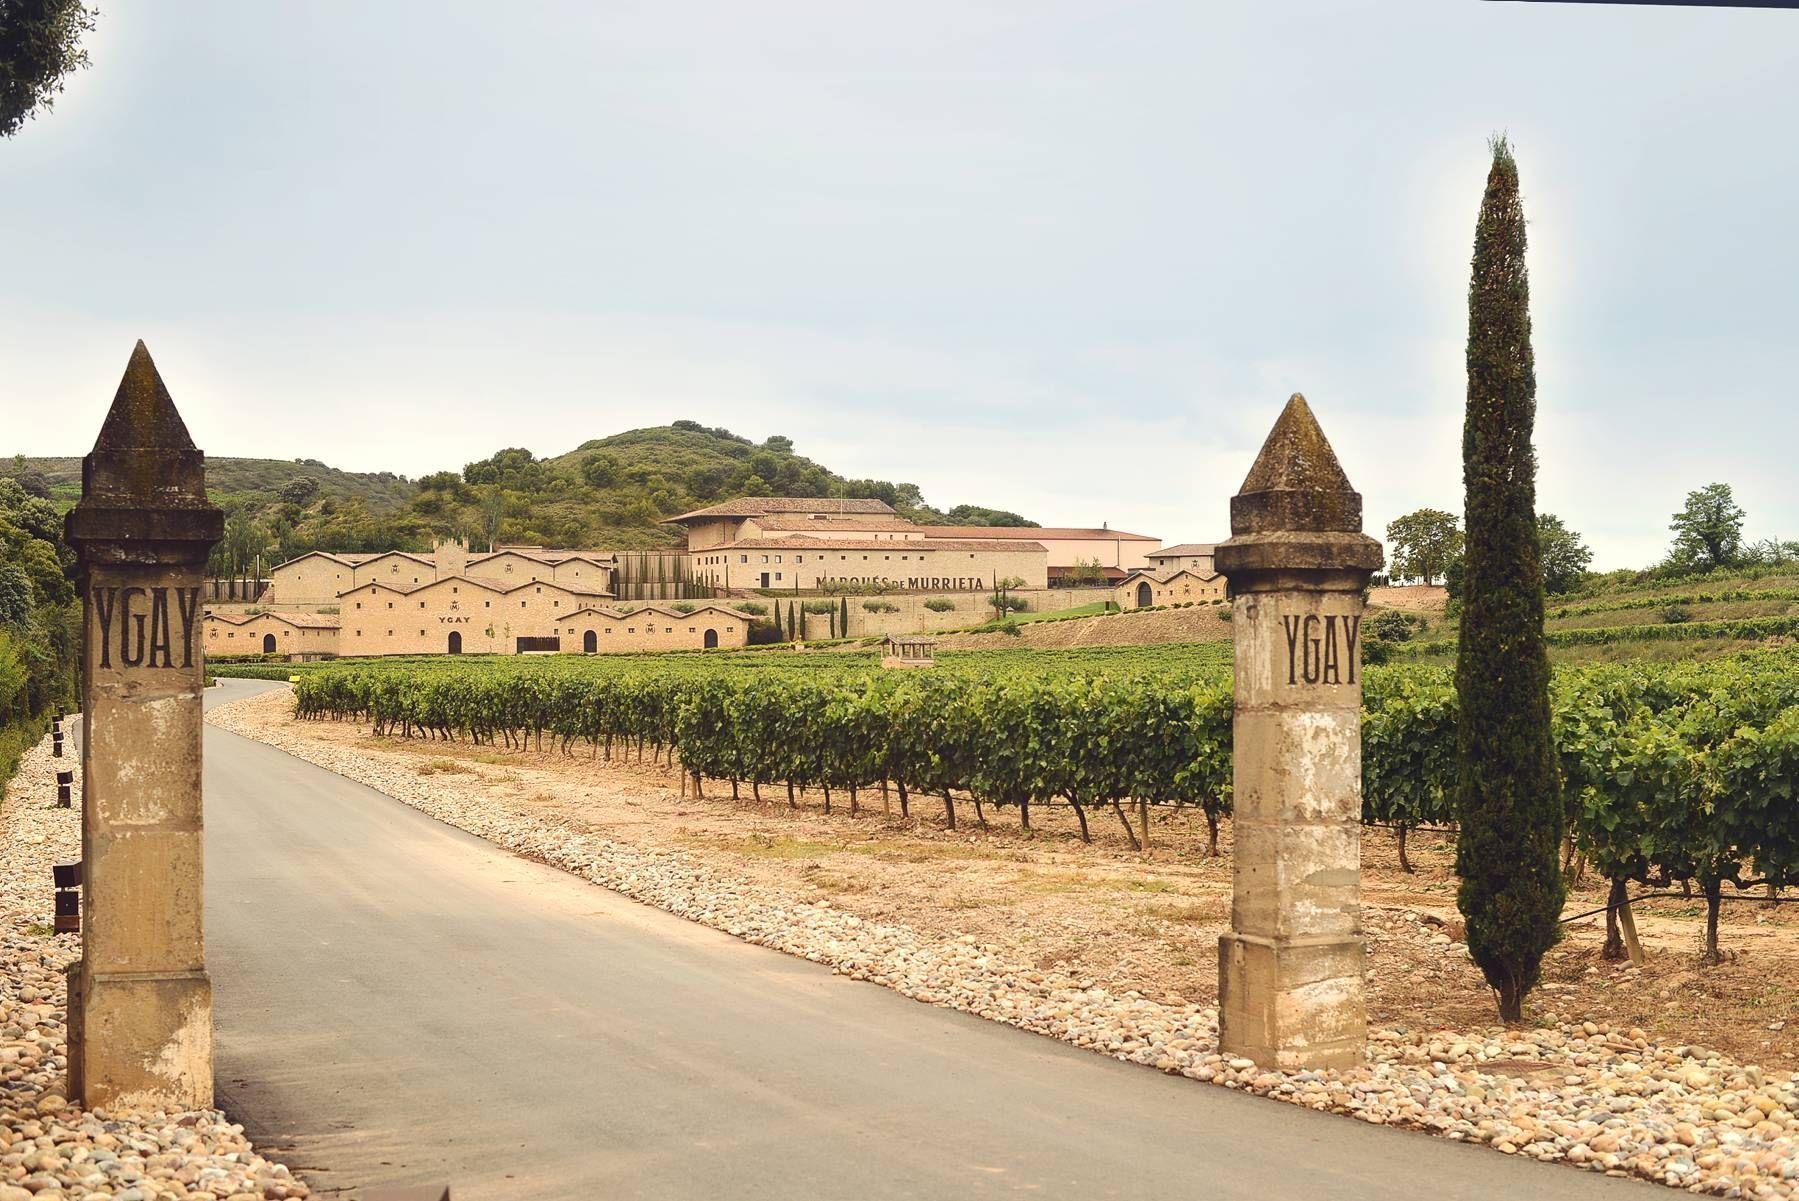 IDYLL: Her dyrkes en av de mest ikoniske spanske vinene - Castillo Ygay fra Marques de Murrieta. Foto: Marques de Murrieta.